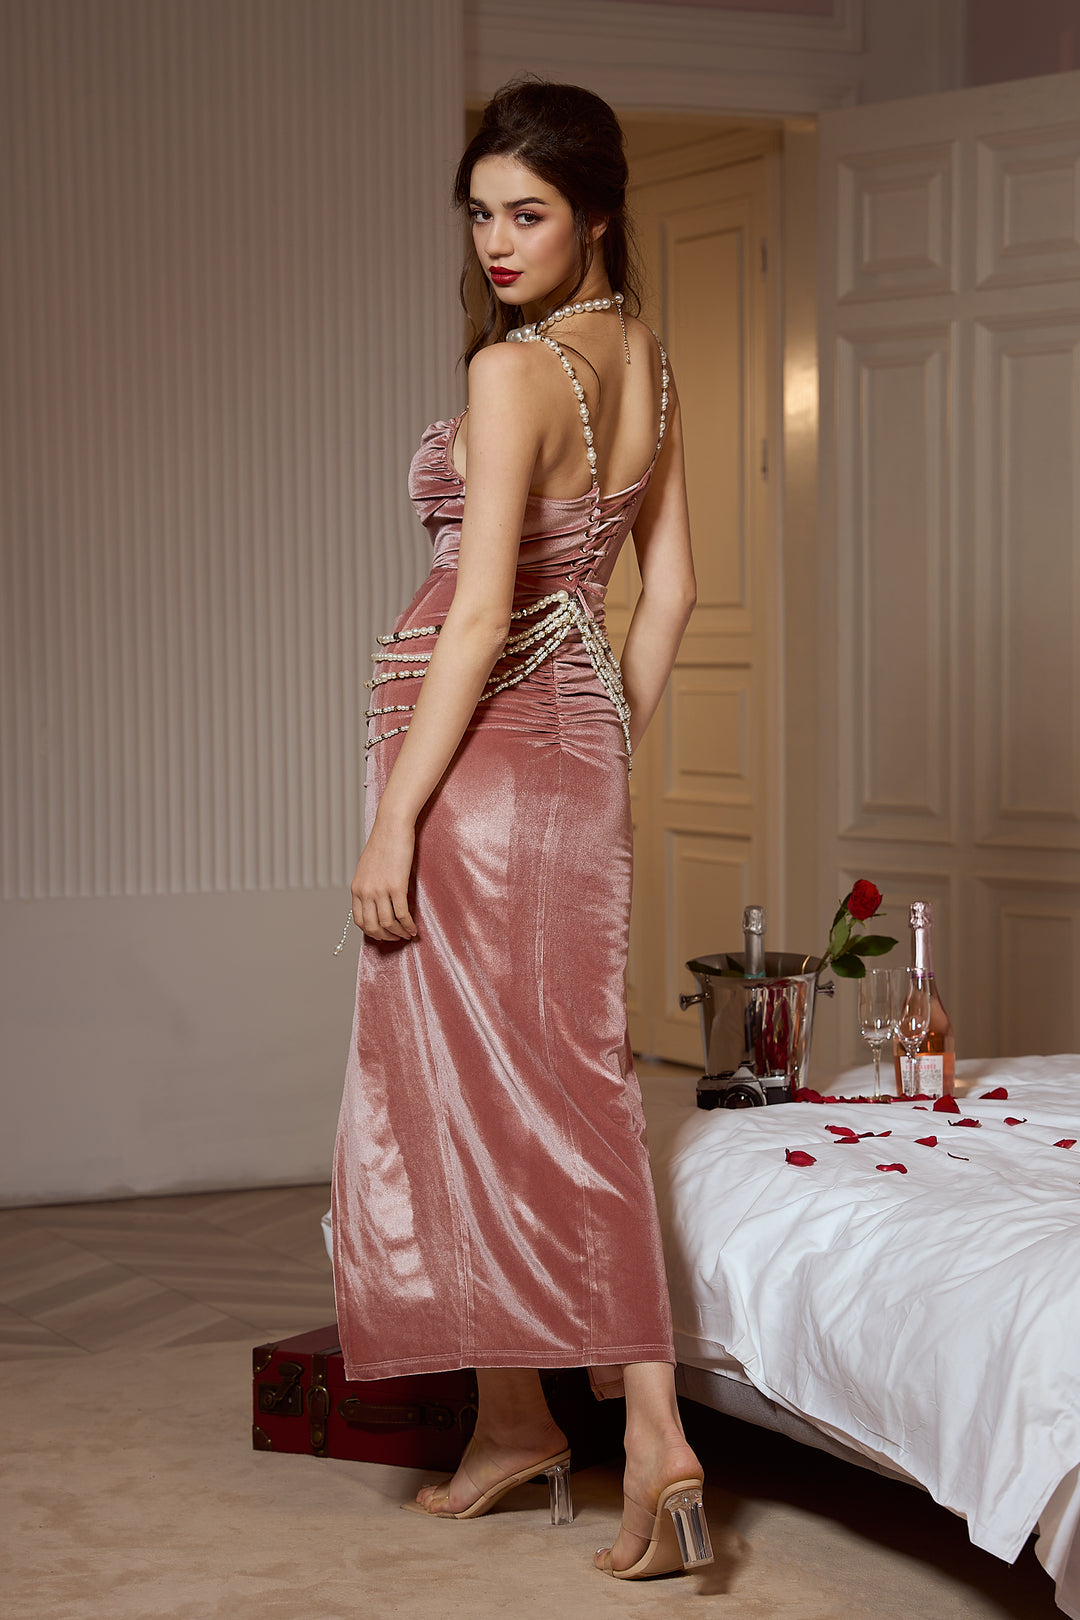 Sesidy Colleen Velvet Blush Pearl-Embellished Dress in Pink